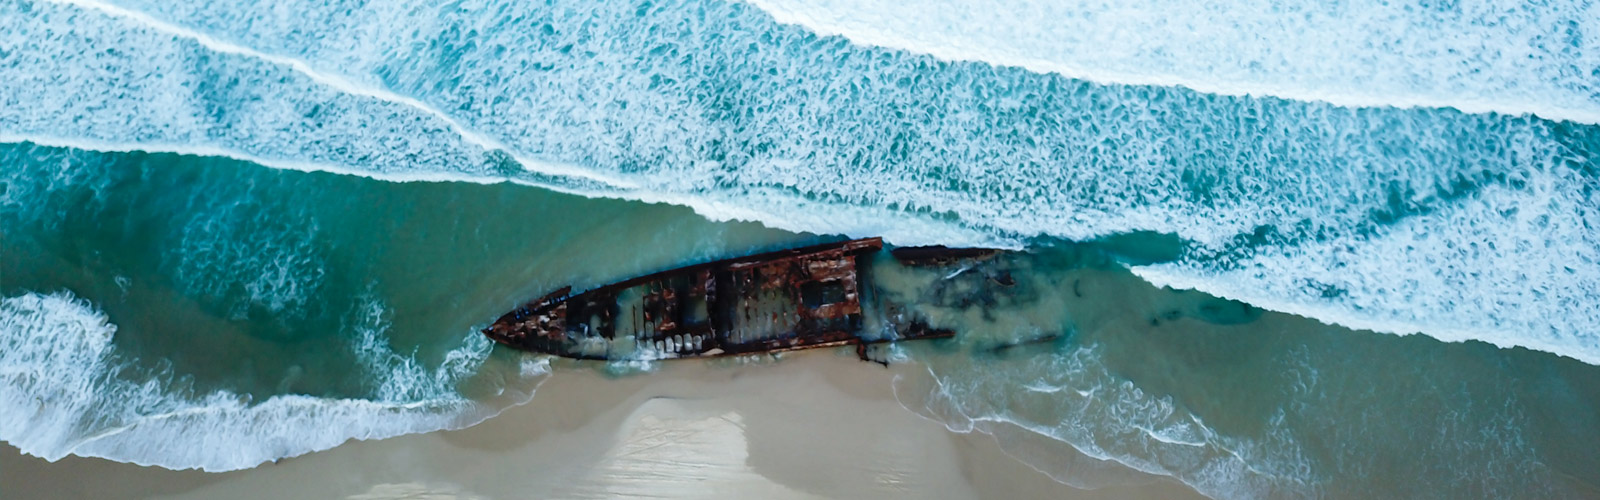 Fraser Island Shipwrecks